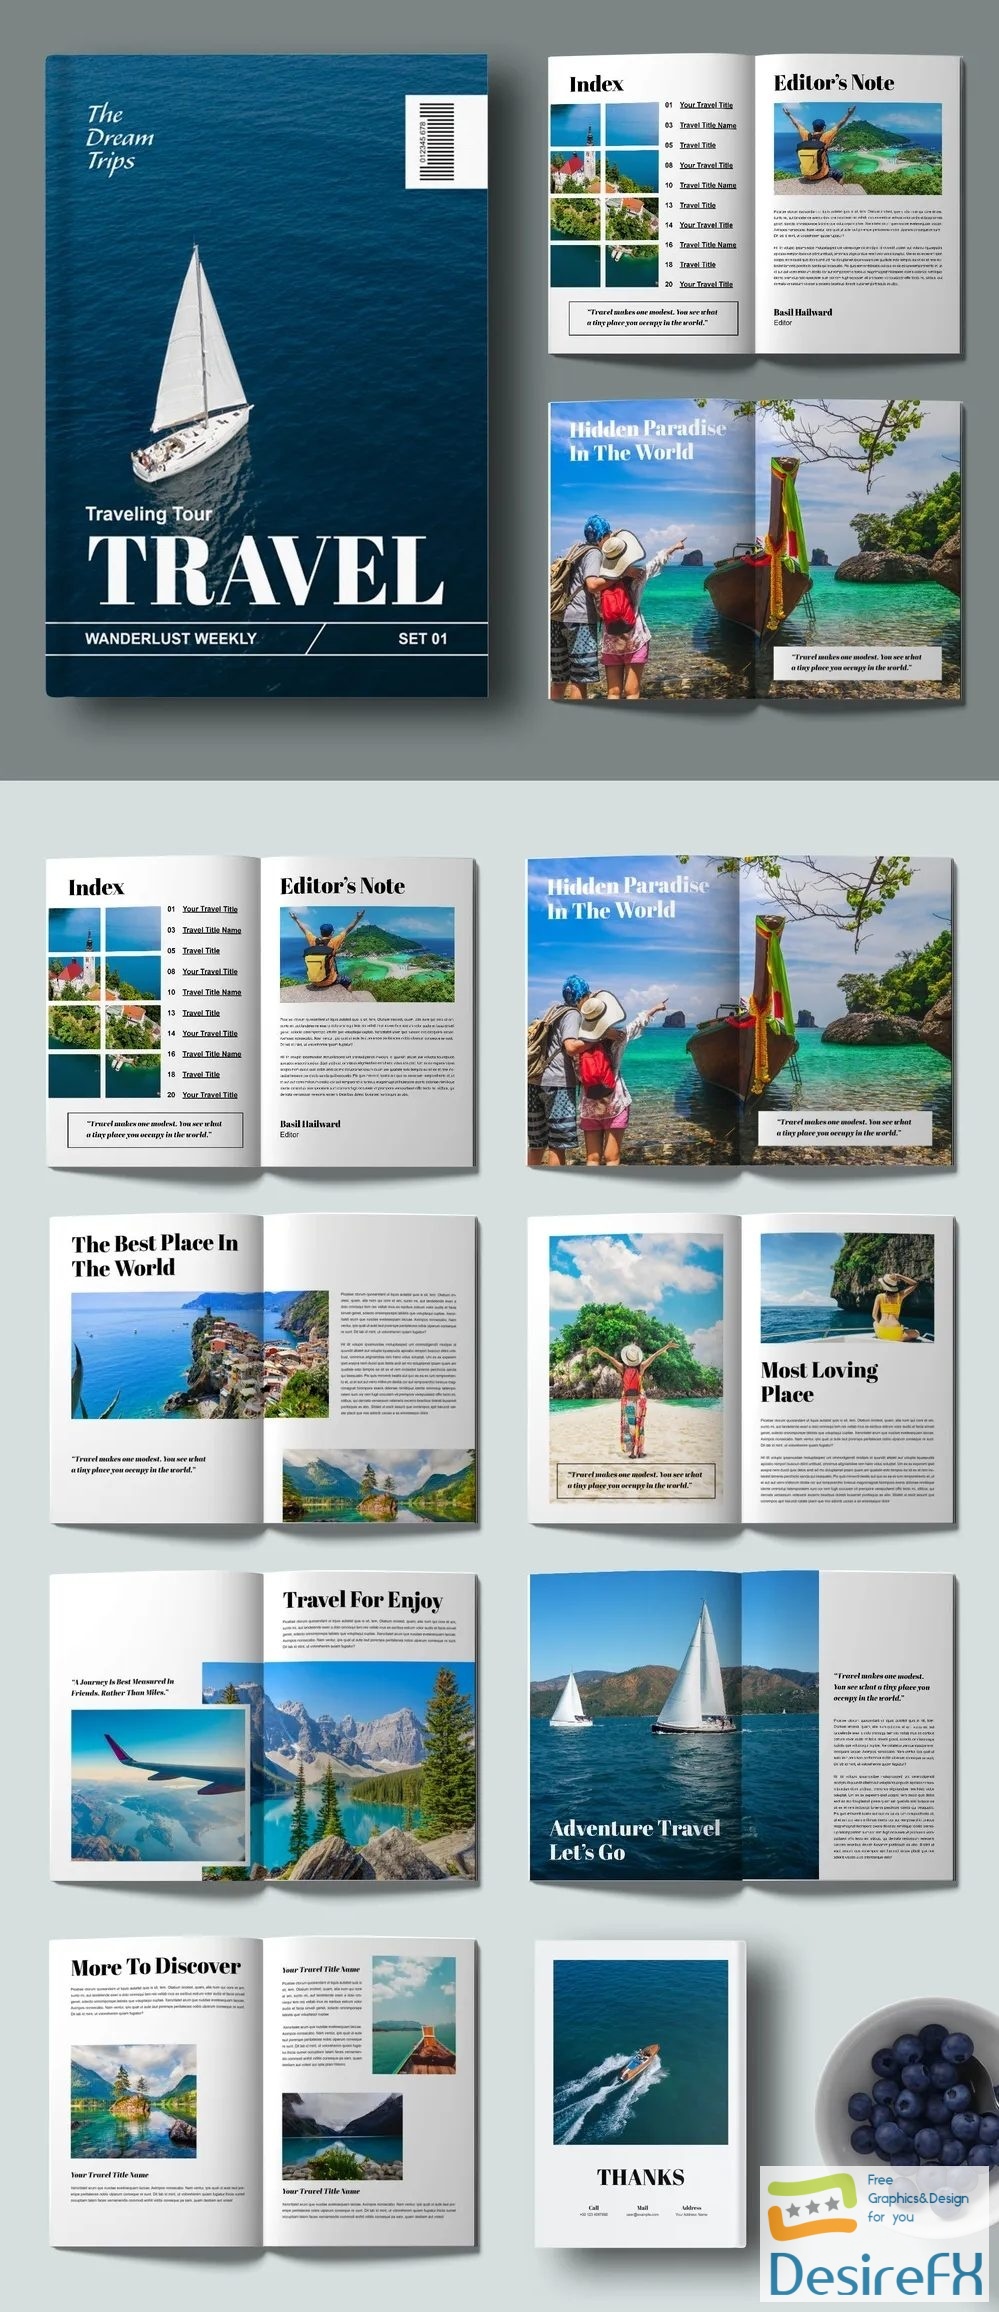 Adobestock - Travel Magazine Template 718530054